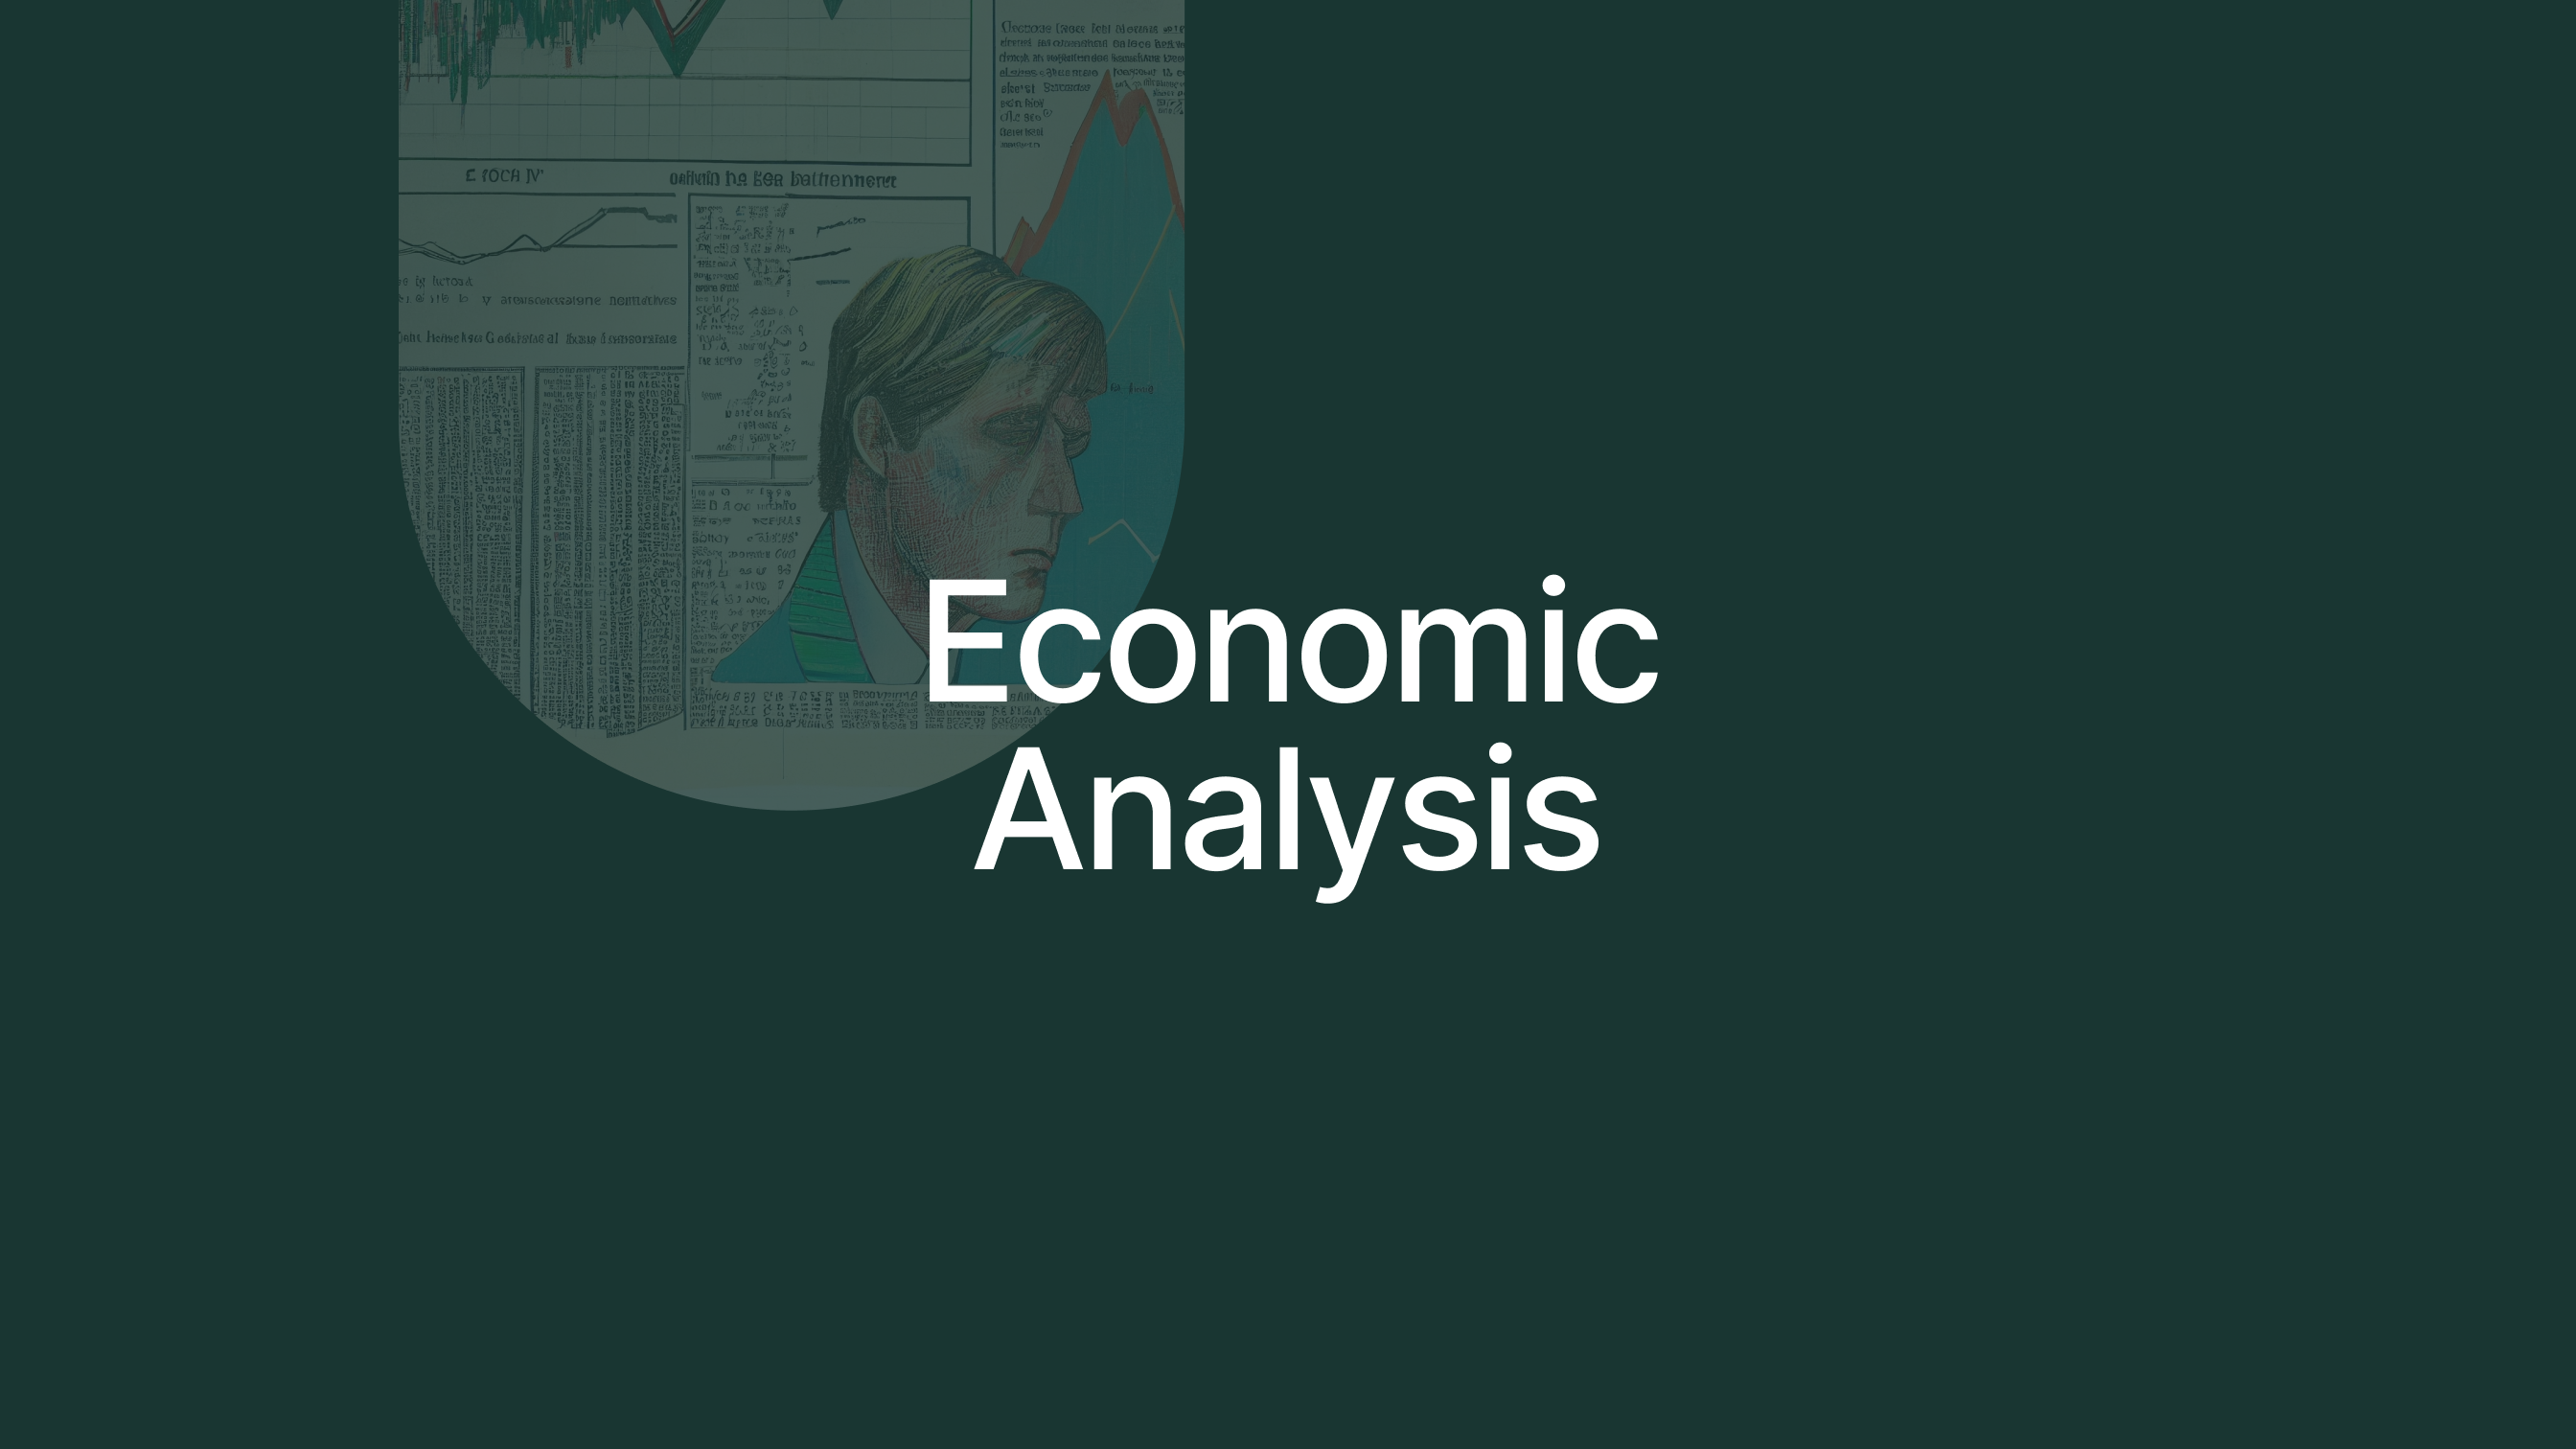 Economic Analysis - Insights into Market Dynamics